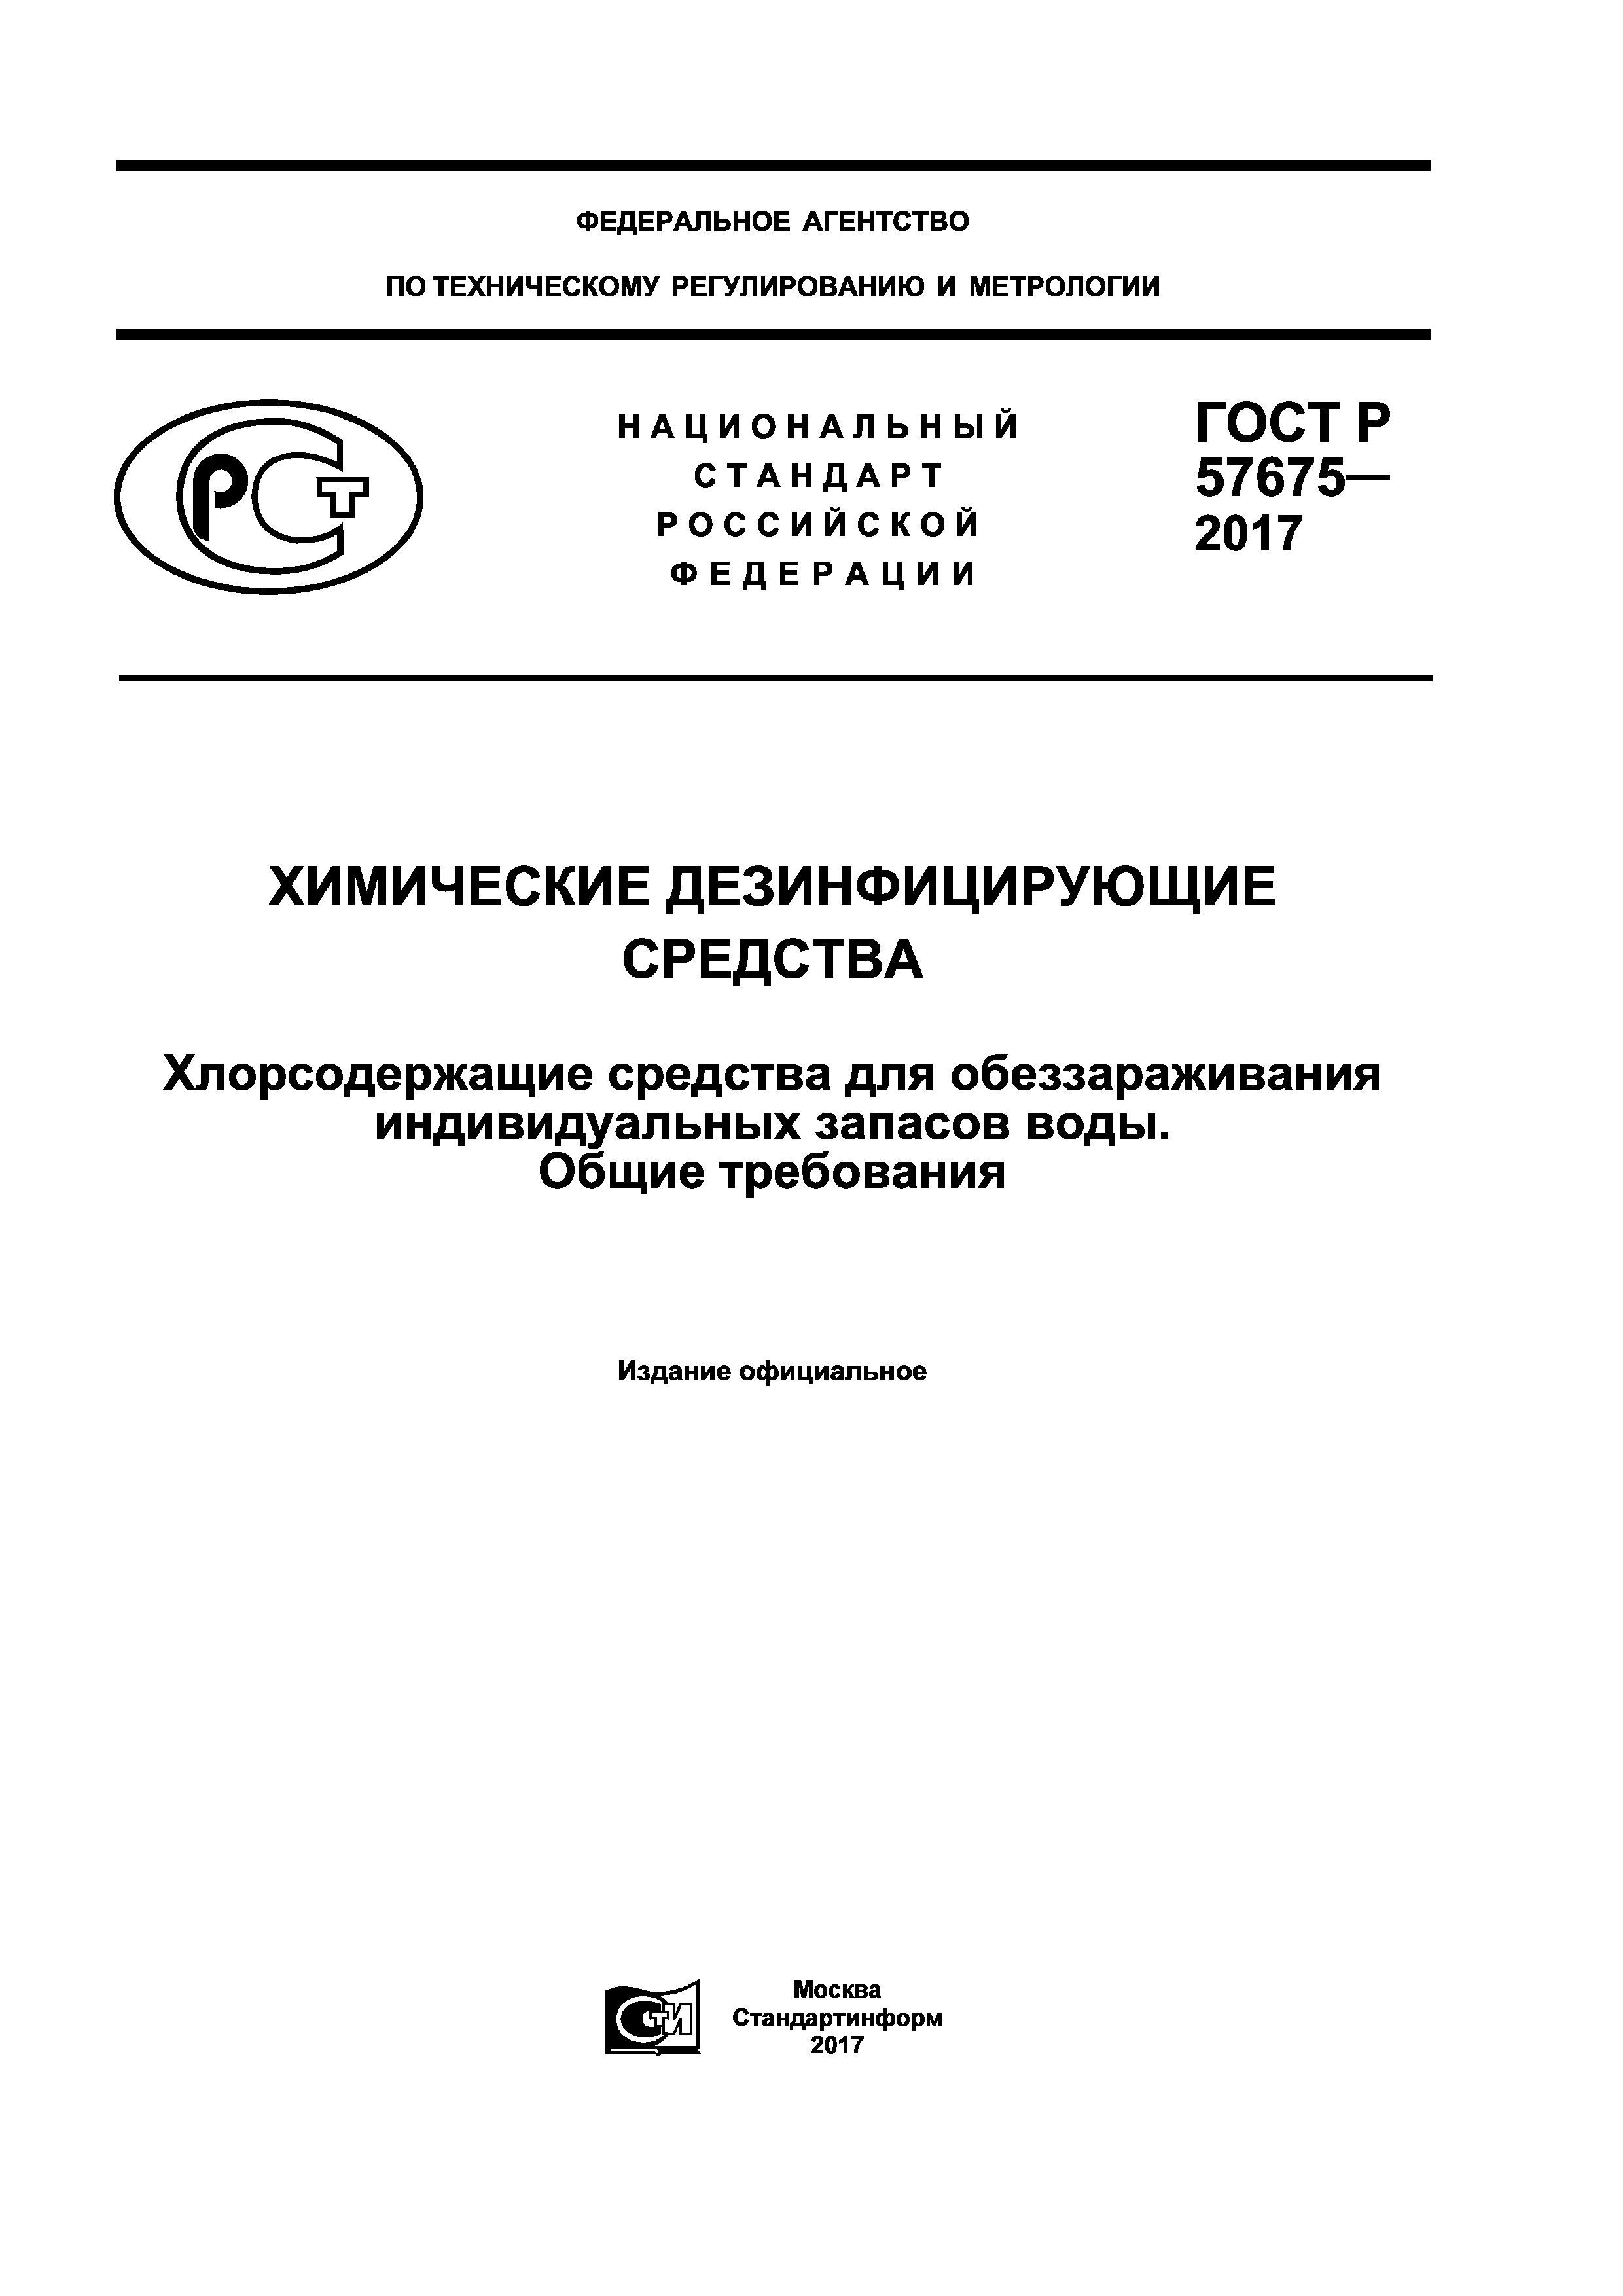 ГОСТ Р 57675-2017